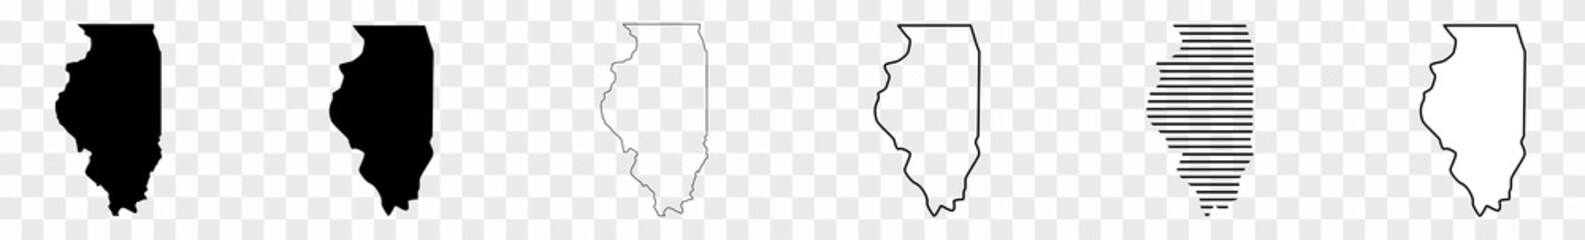 illinois map black | state border | united states | us america | transparent isolated | variations